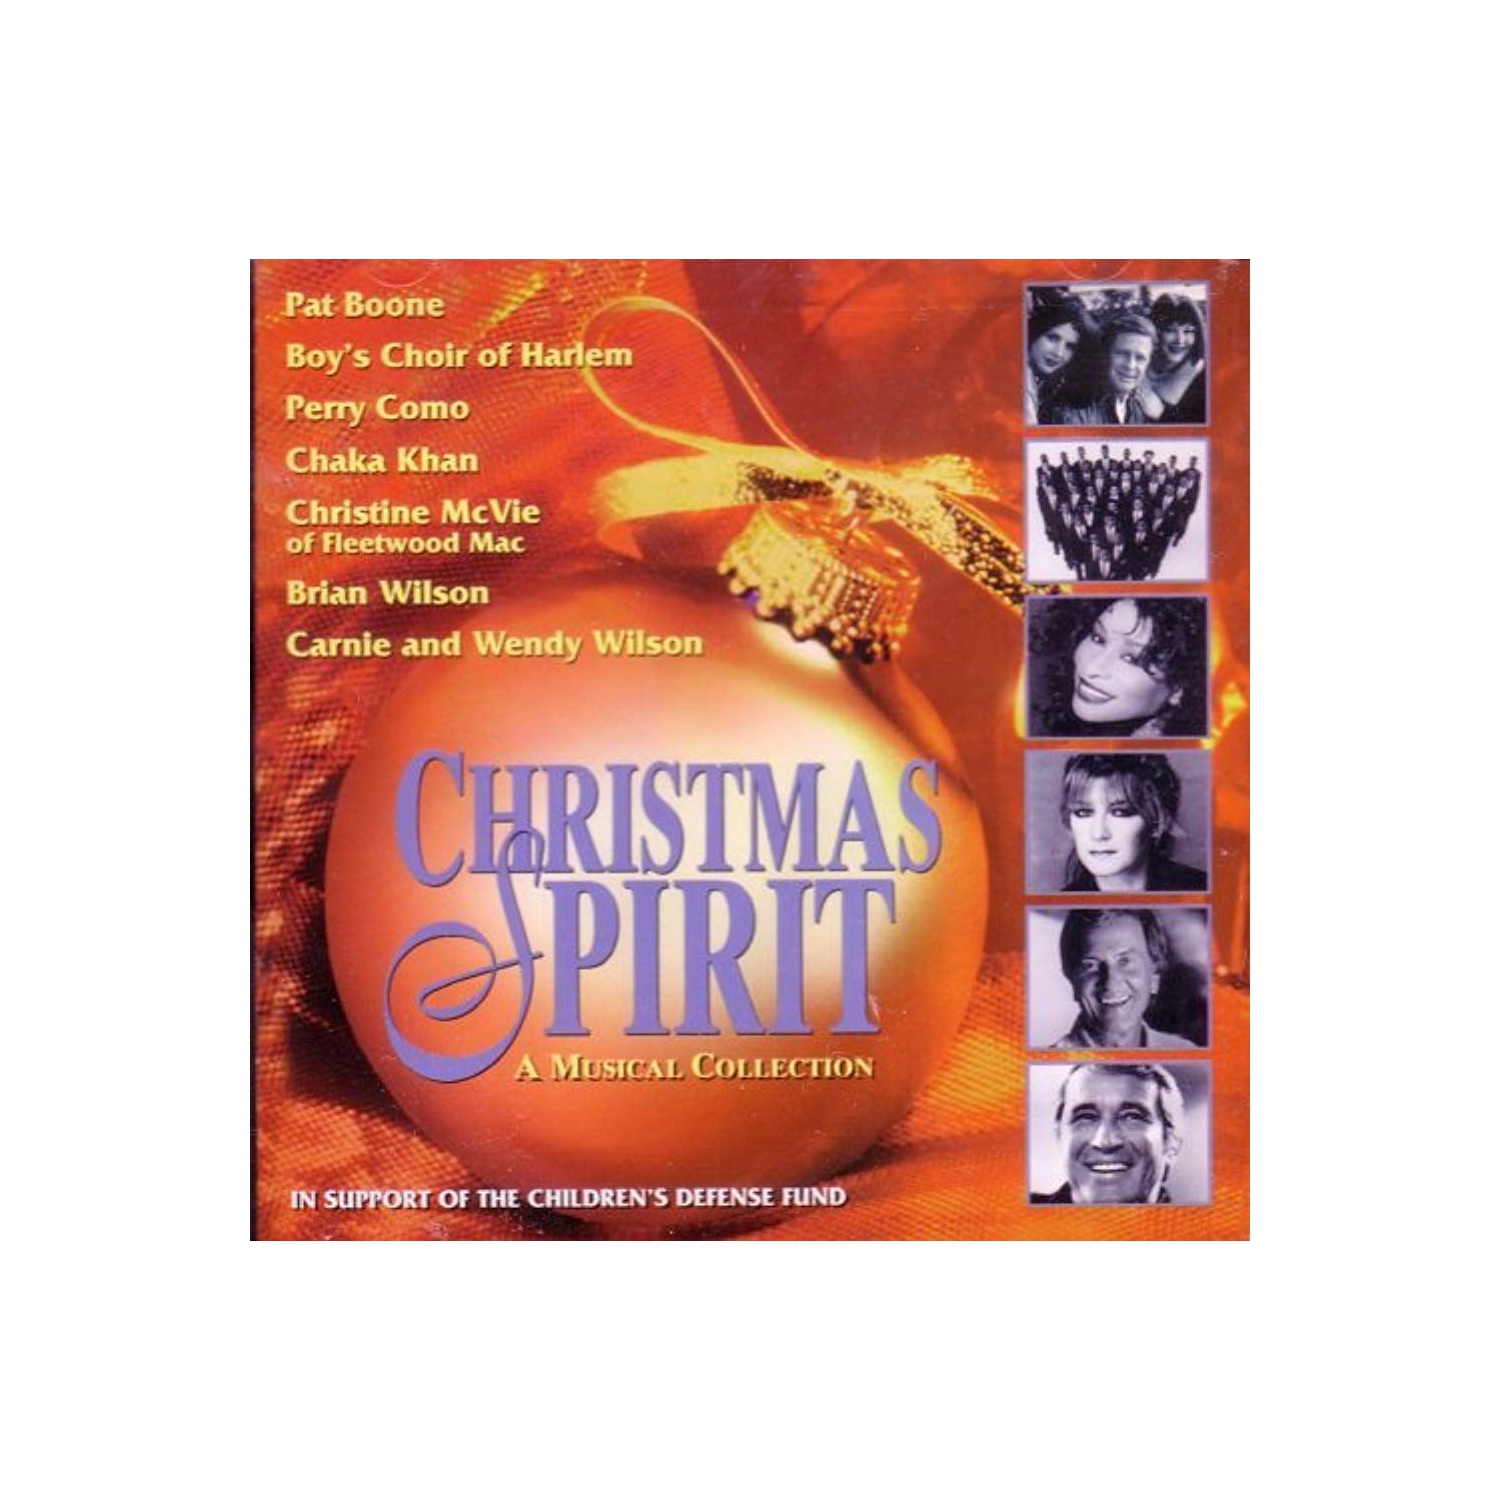 Christmas Spirit - A Musical Collection [Audio CD] Pat Boone; Boy's Choir Of Harlem; Perry Como; Chaka Khan;